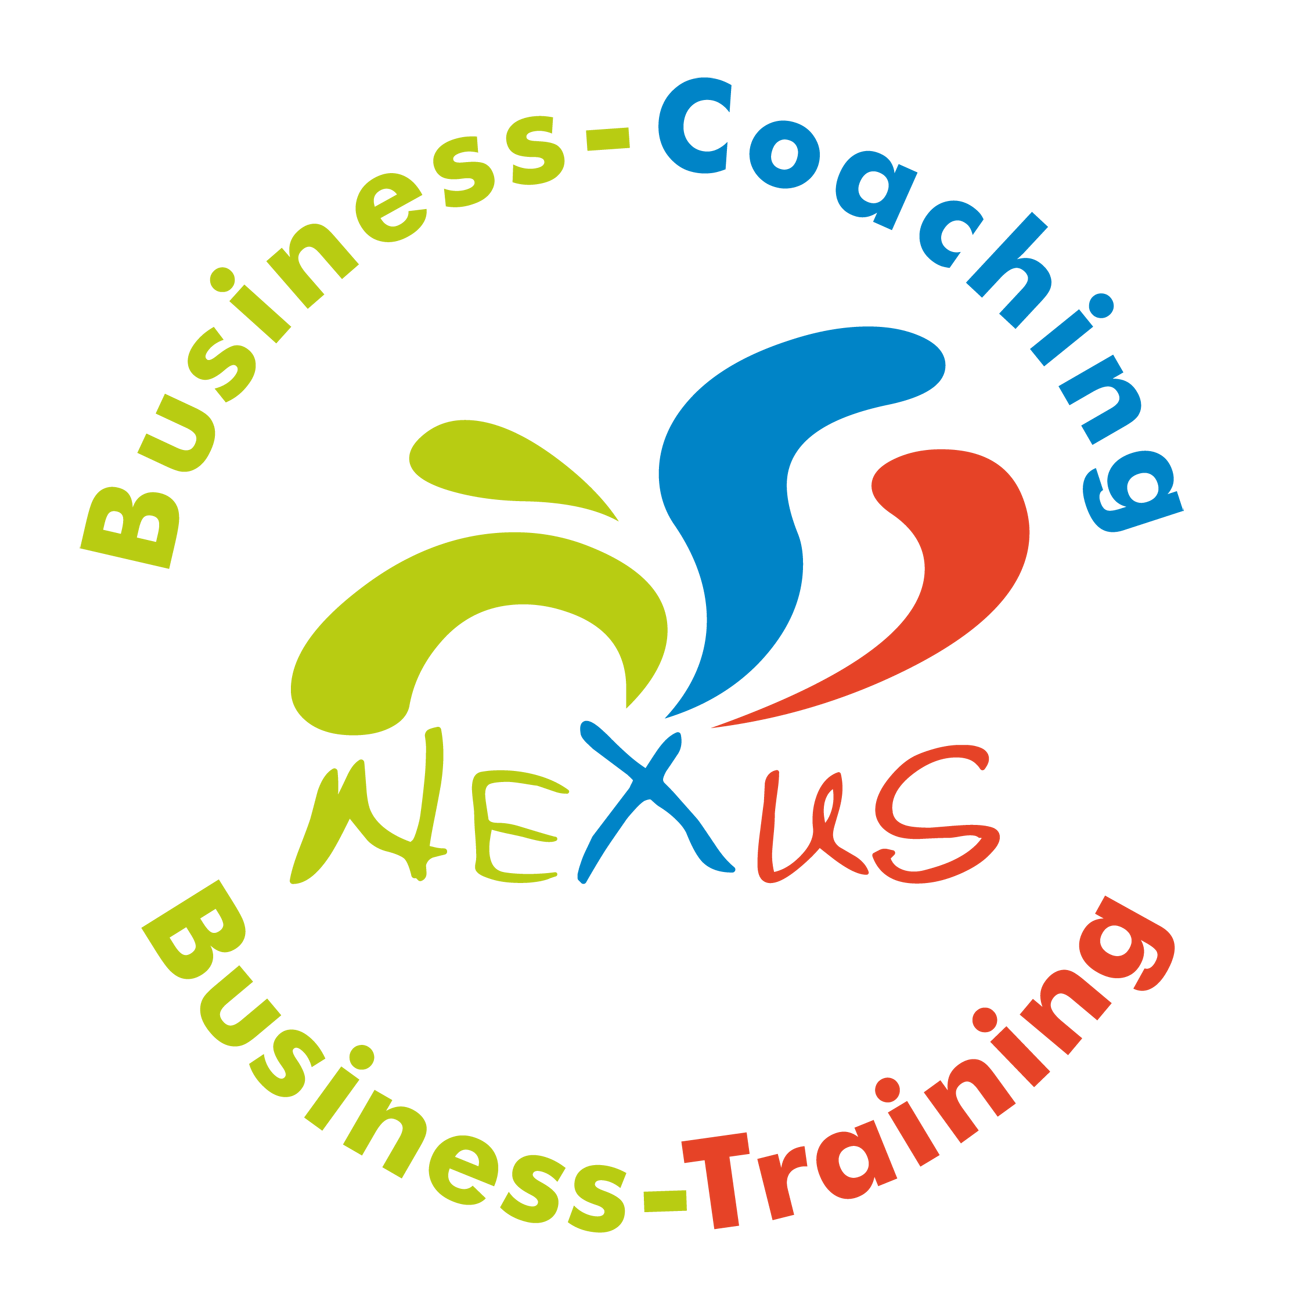 Business-Coaching Schwaben Bayern, Führungskräfte-Coaching, Führungskräftetraining, Persönlichkeitstraining